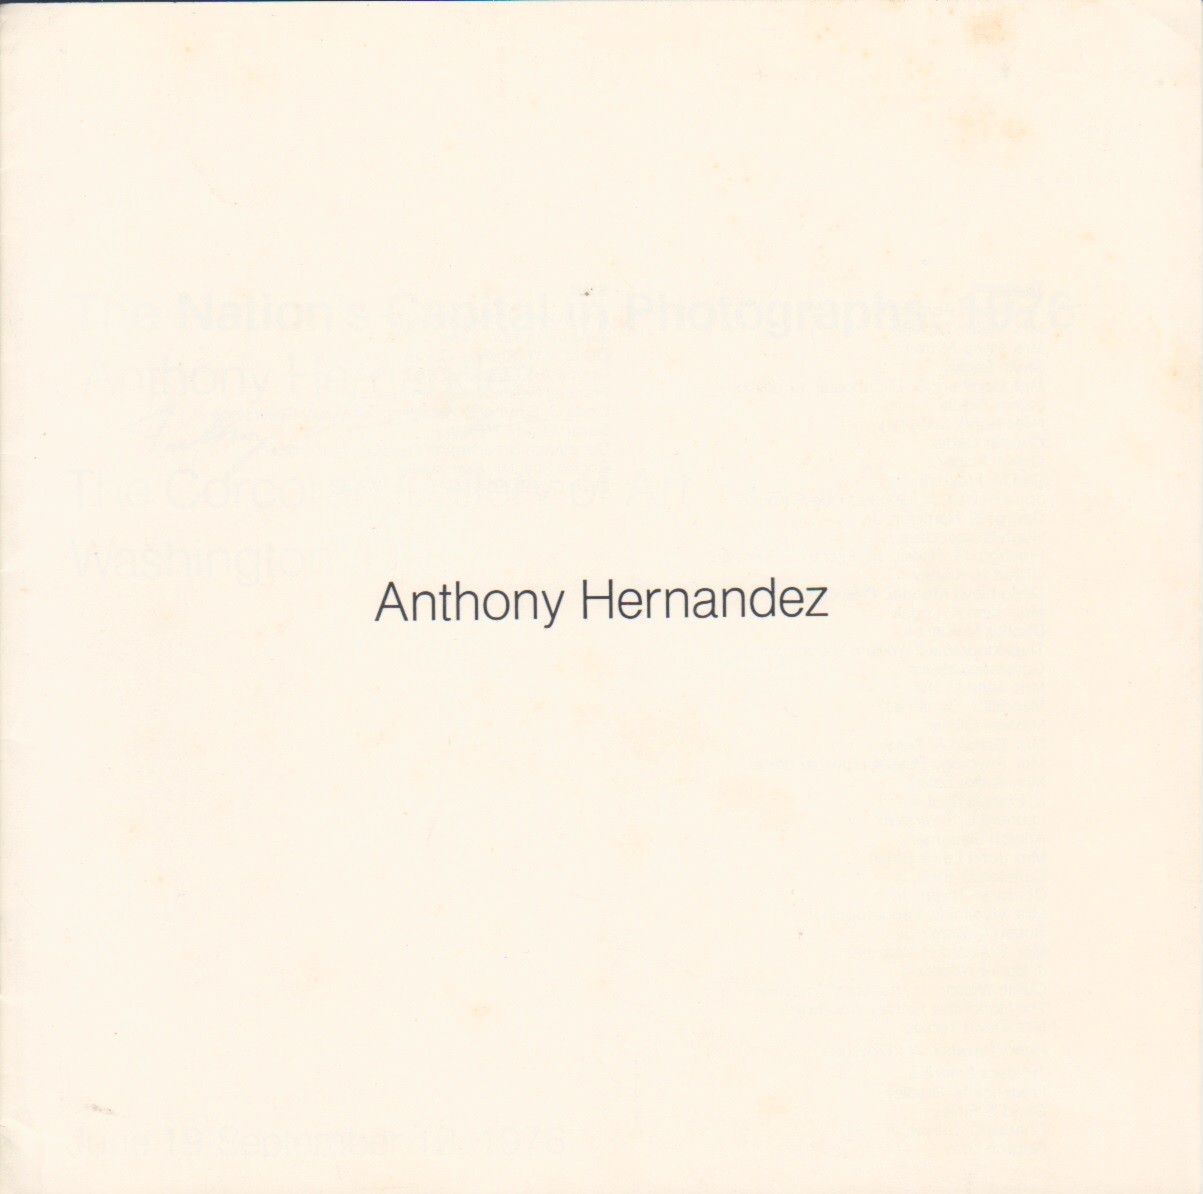 (HERNANDEZ, ANTHONY). Hernandez, Anthony, Jane Livingston & Roy Slade - ANTHONY HERNANDEZ: THE NATION'S CAPITAL IN PHOTOGRAPHS, 1976 - SIGNED BY THE PHOTOGRAPHER